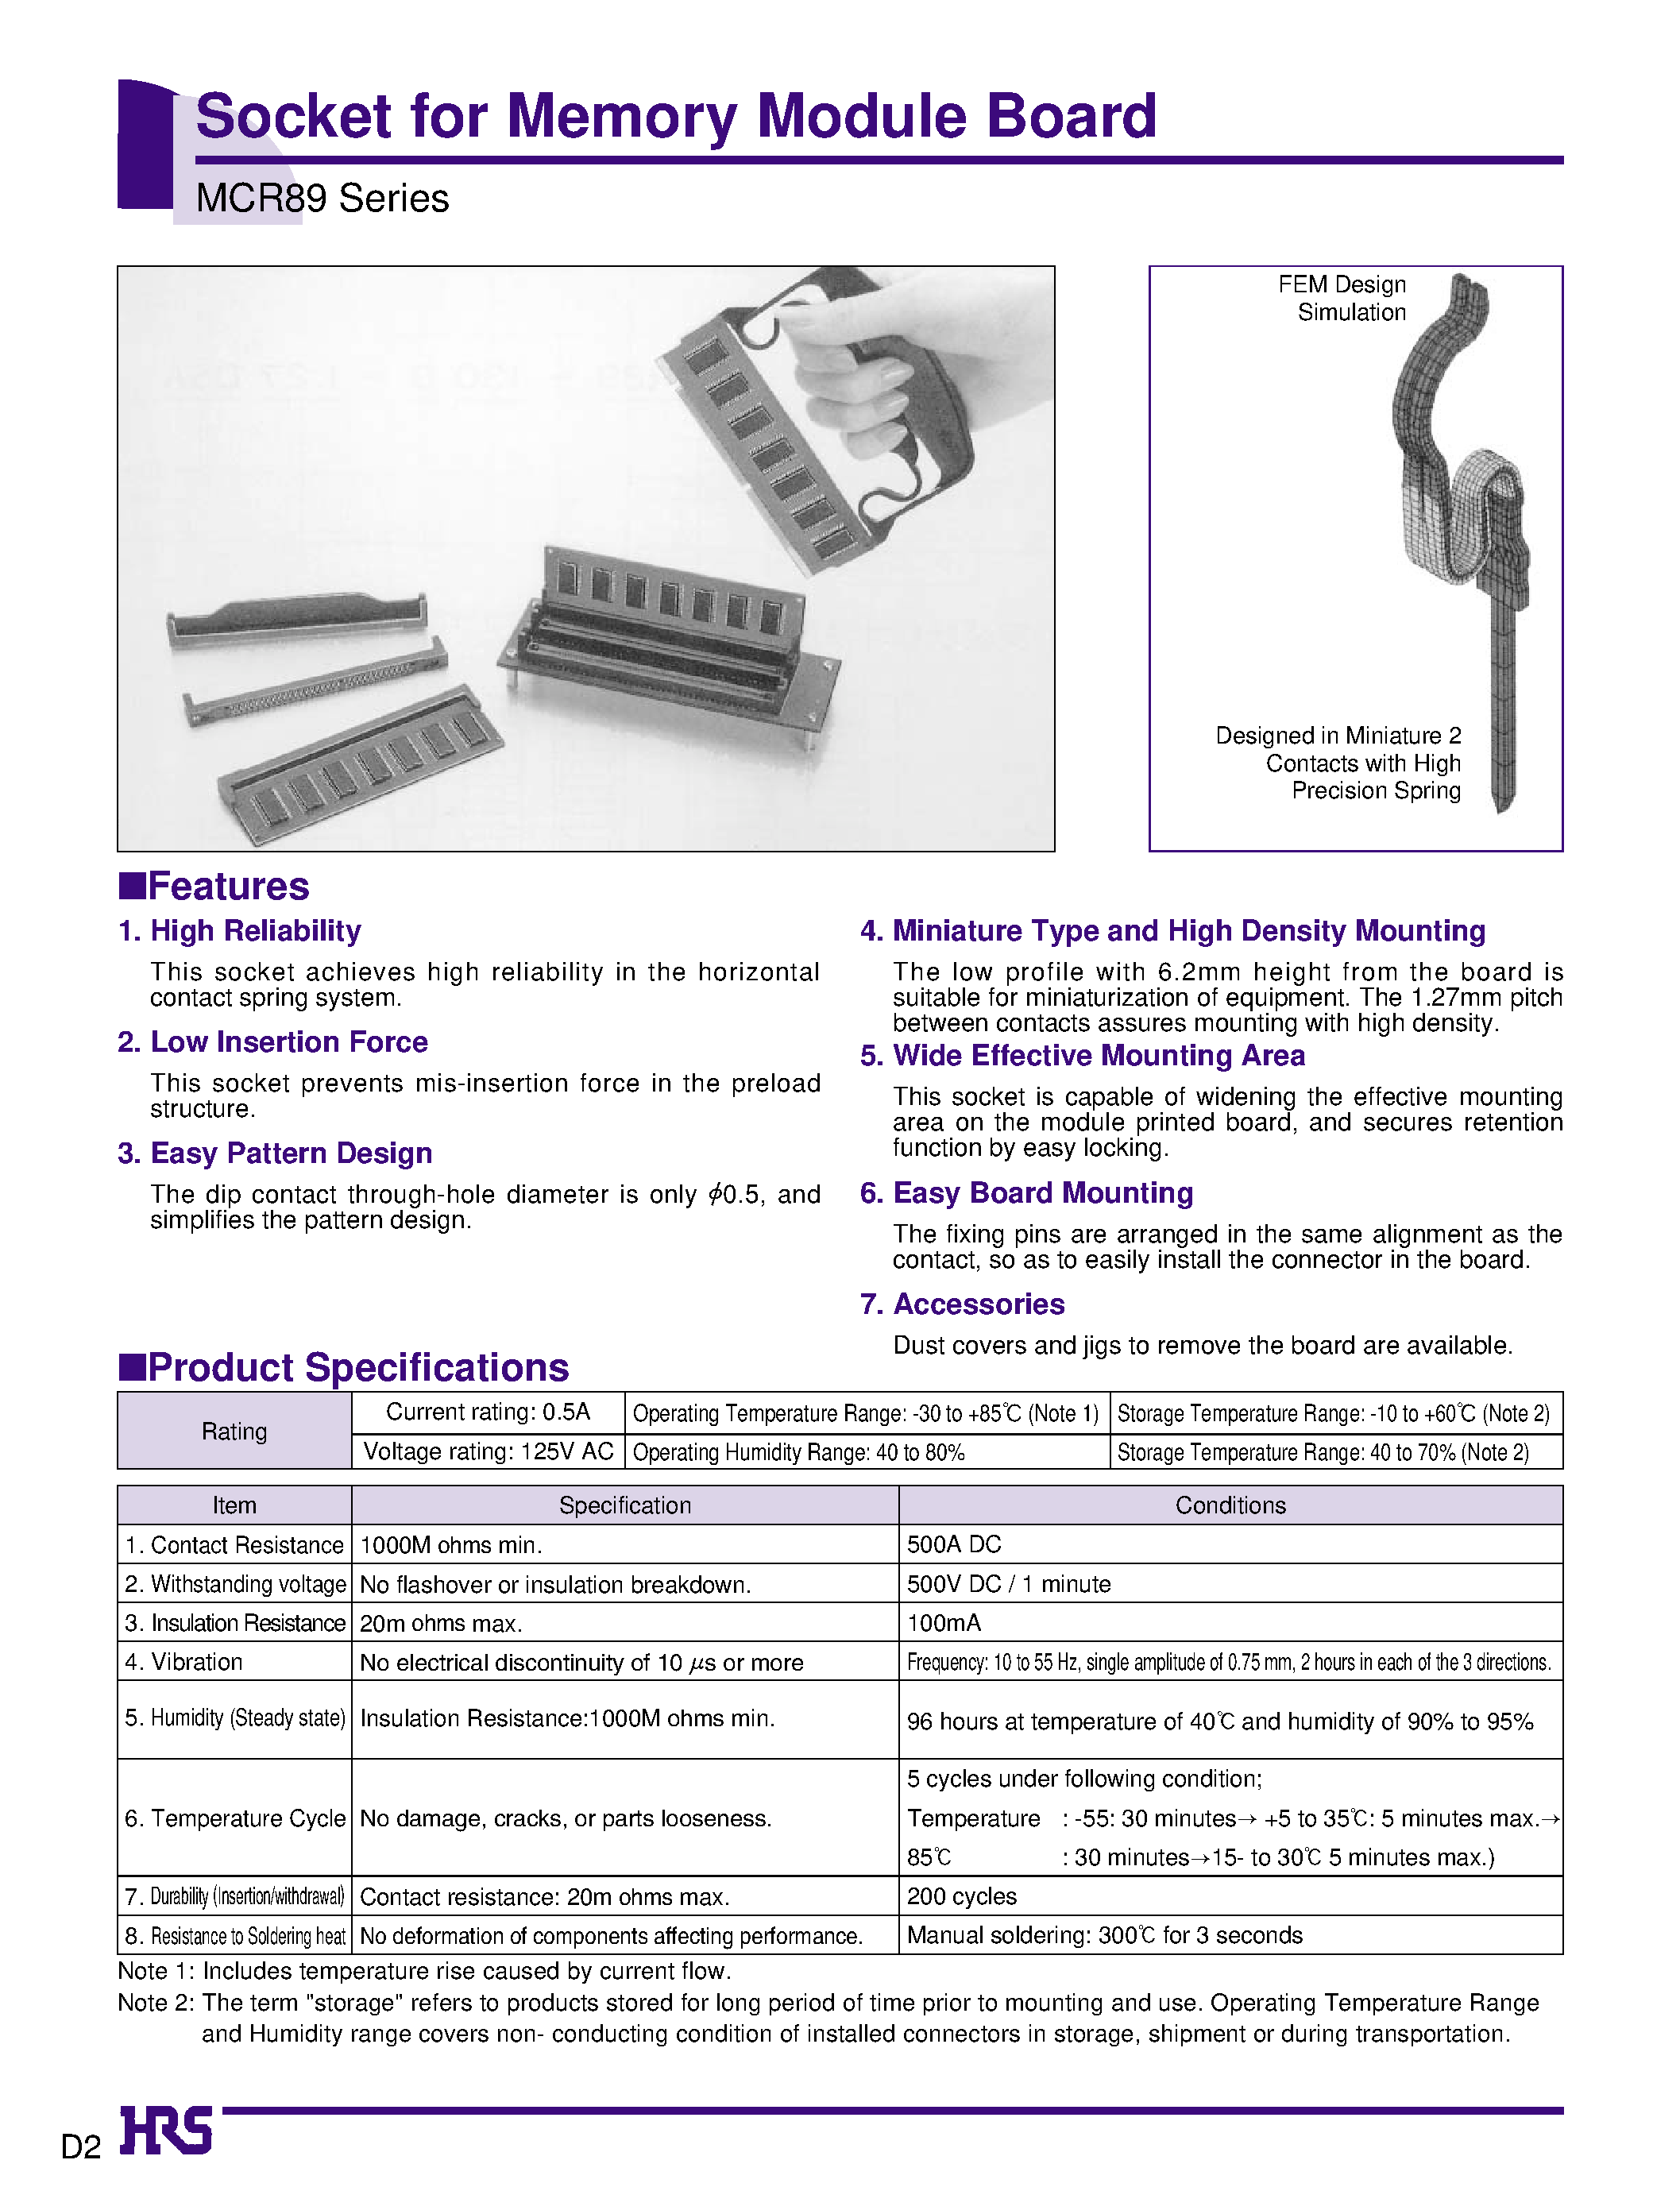 Datasheet MCR89-130D-1.27DSA - Socket for Memory Module Board page 1